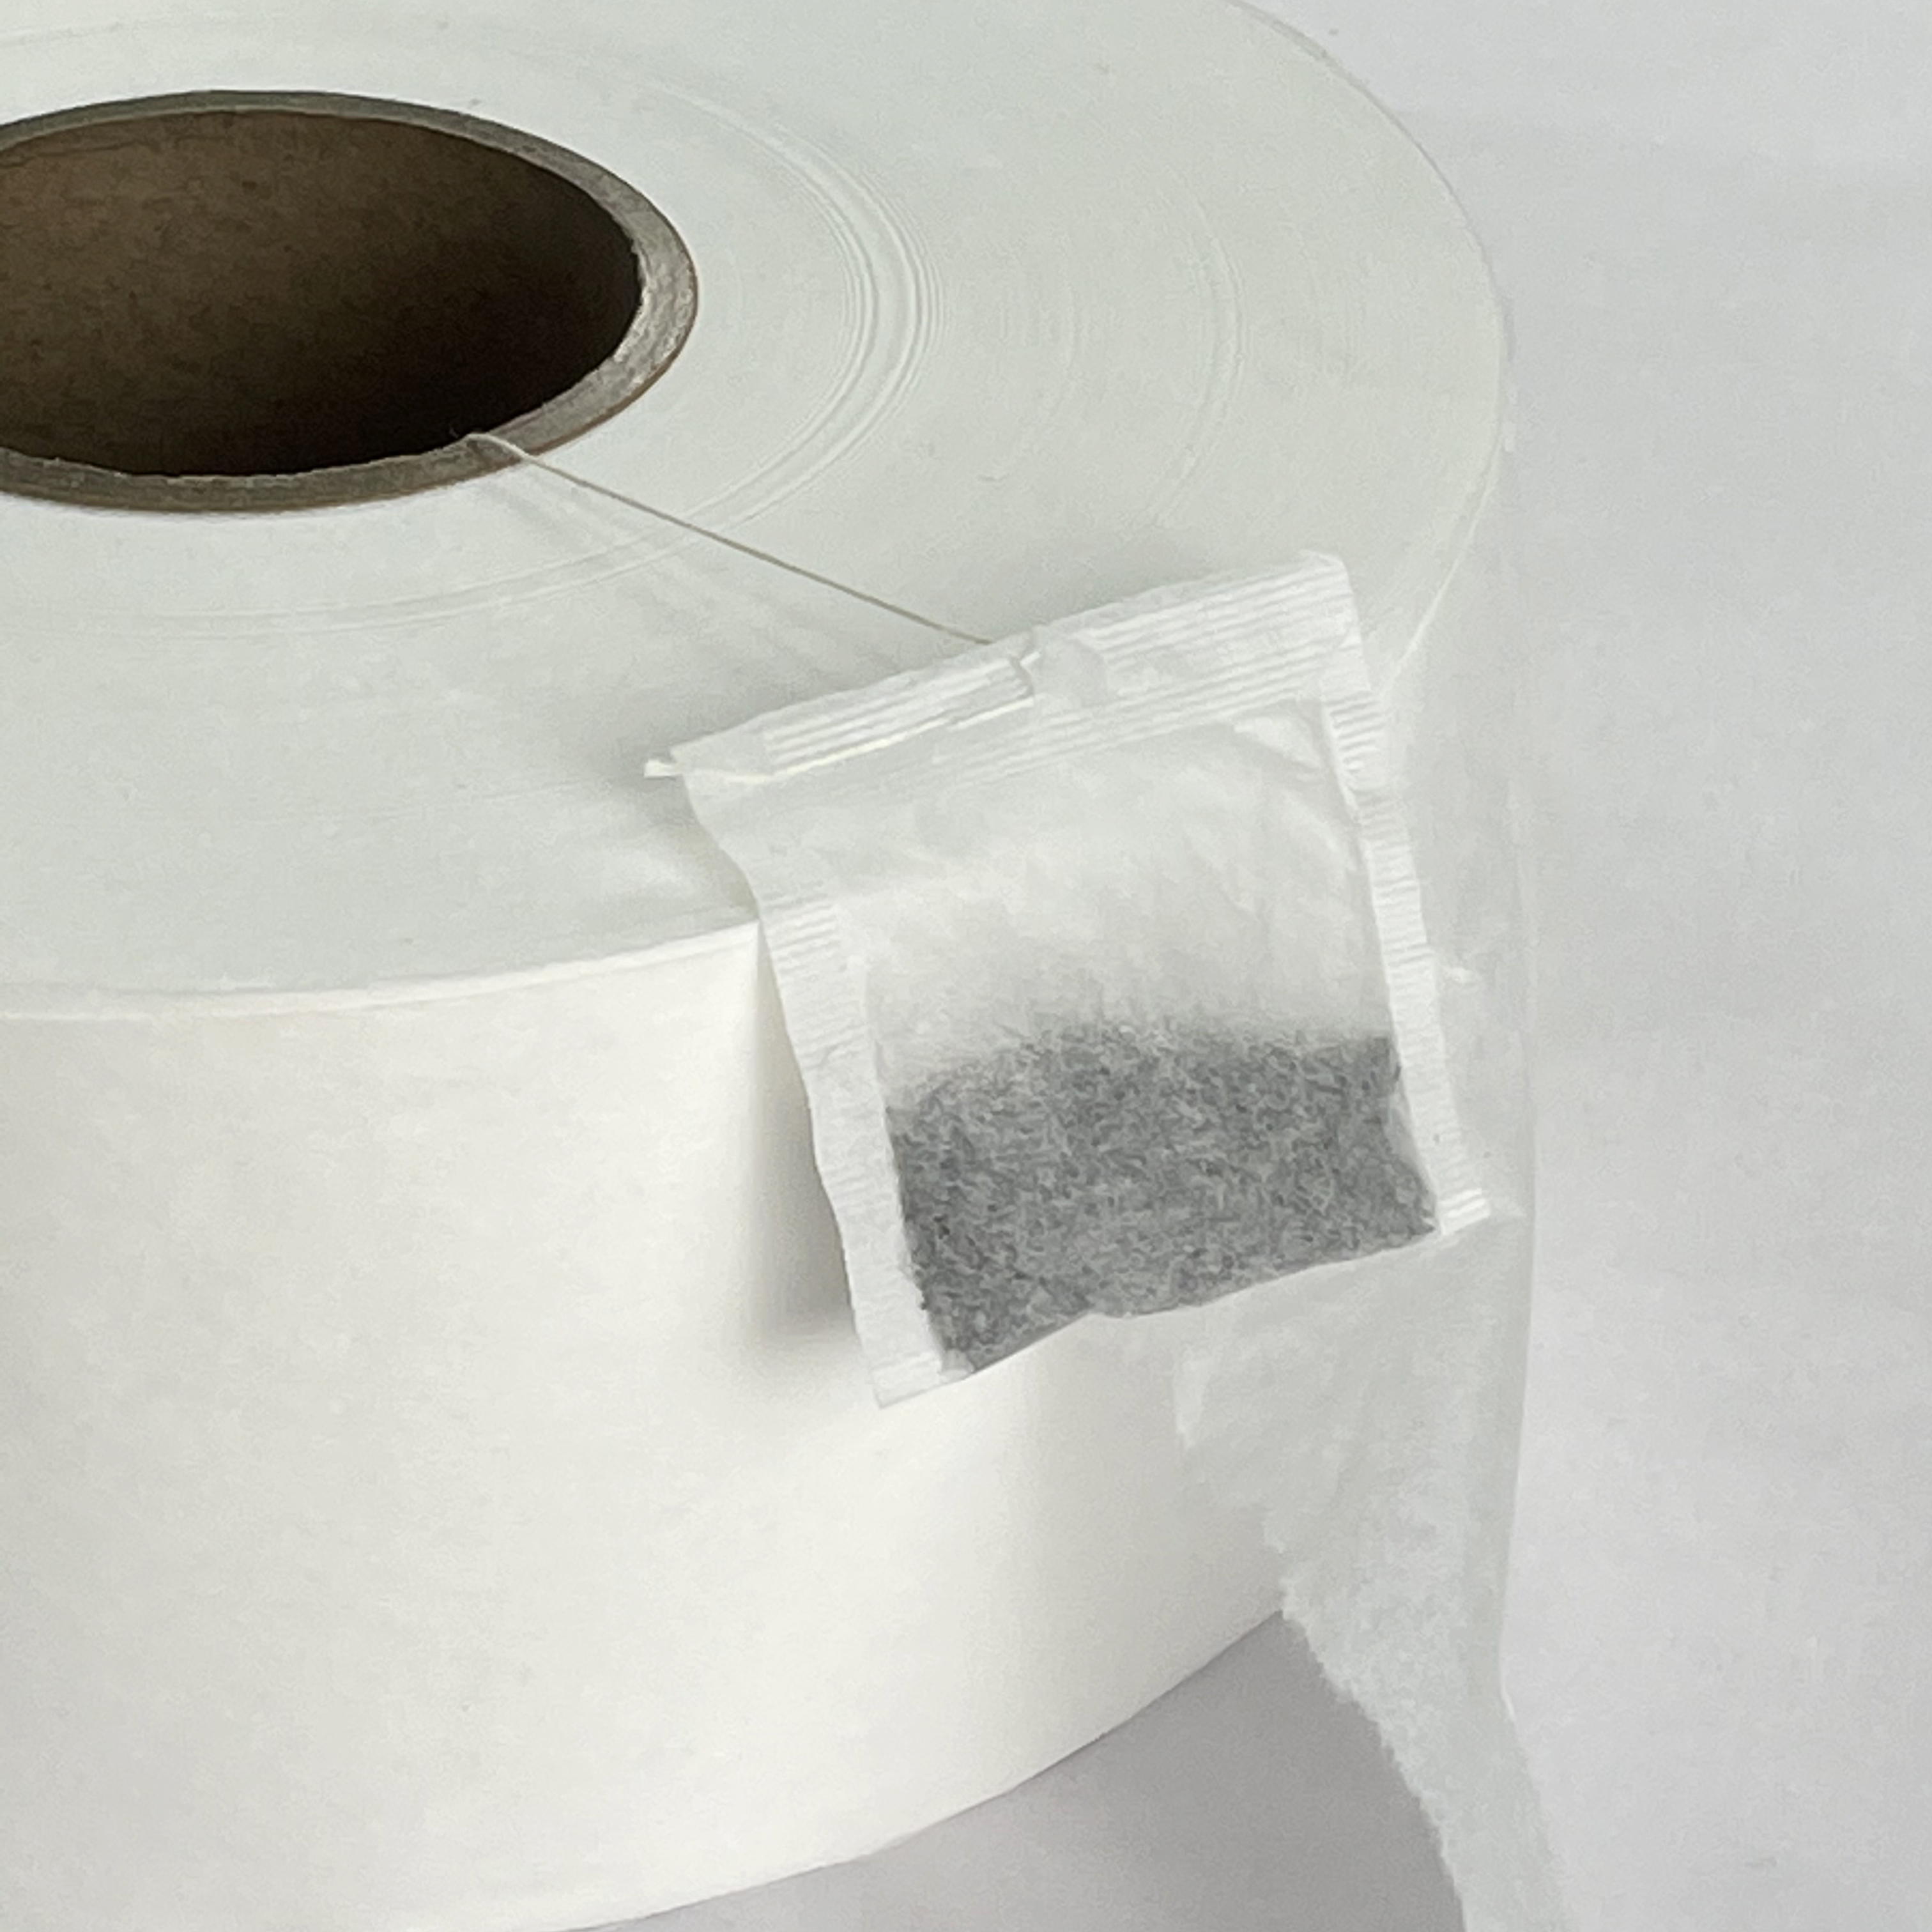 Heat seal filter paper